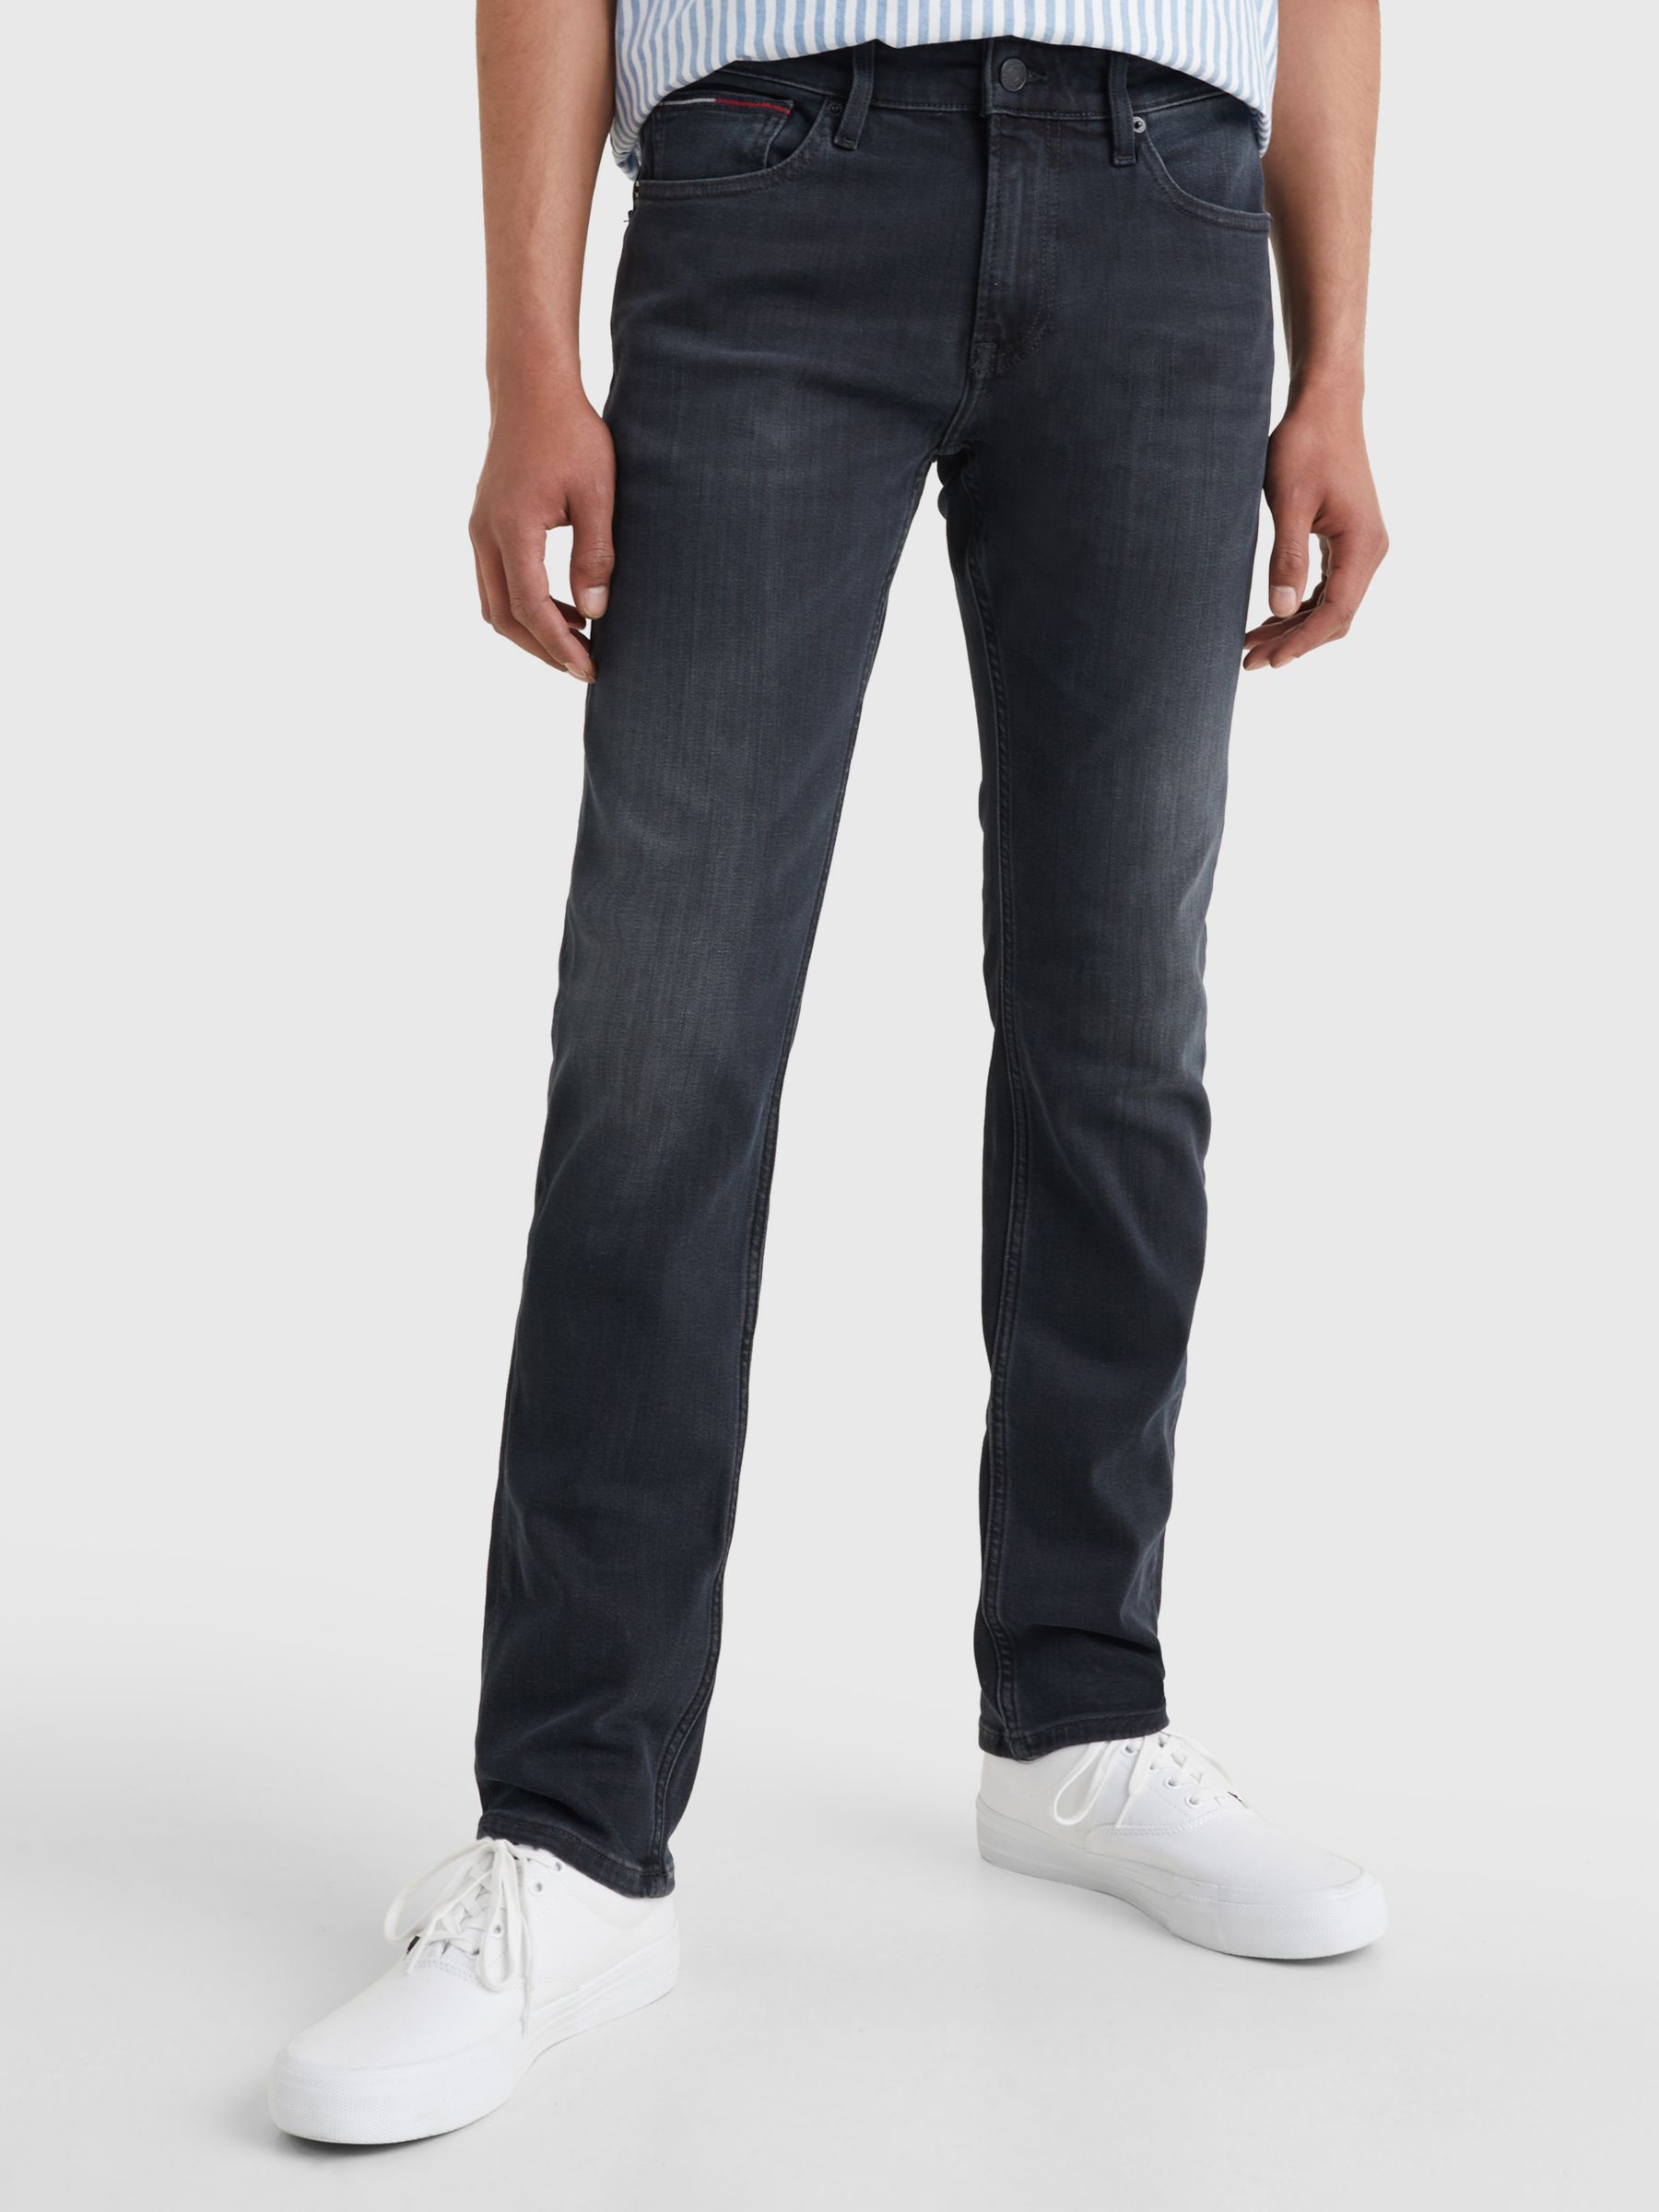 Tommy Jeans Slim Fit Jeans, Dynamic Jacob Black, 30S